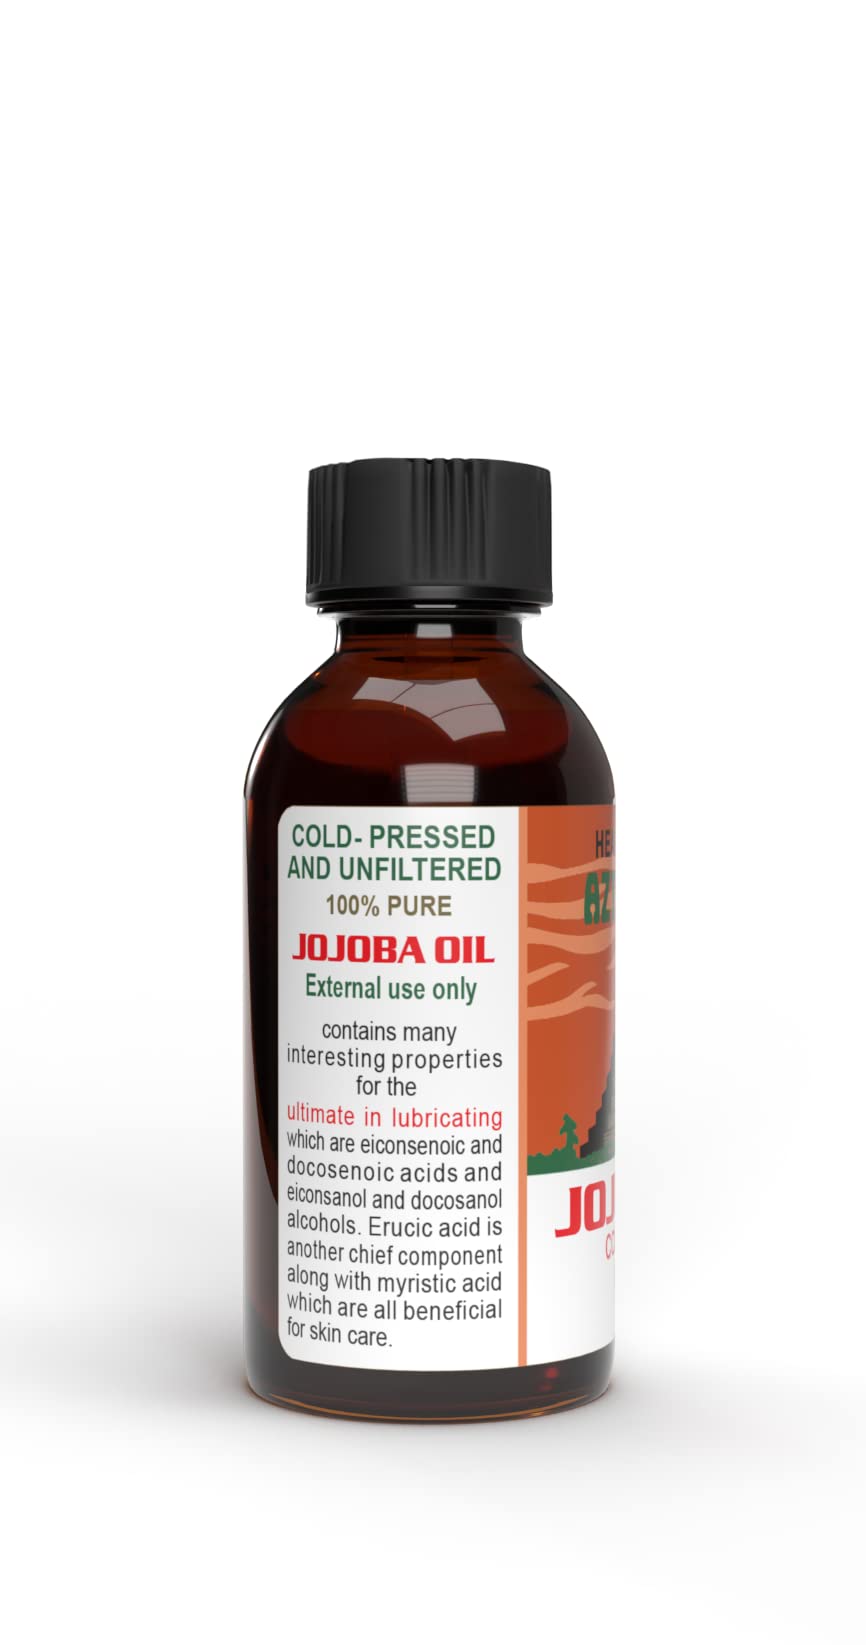 Aztec Secret – Jojoba Oil – 2 OZ Deep Hair & Skin Moisturizer - 100% Pure Jojoba Oil - Cold-Pressed and Unfiltered – 1 pack (2 oz)